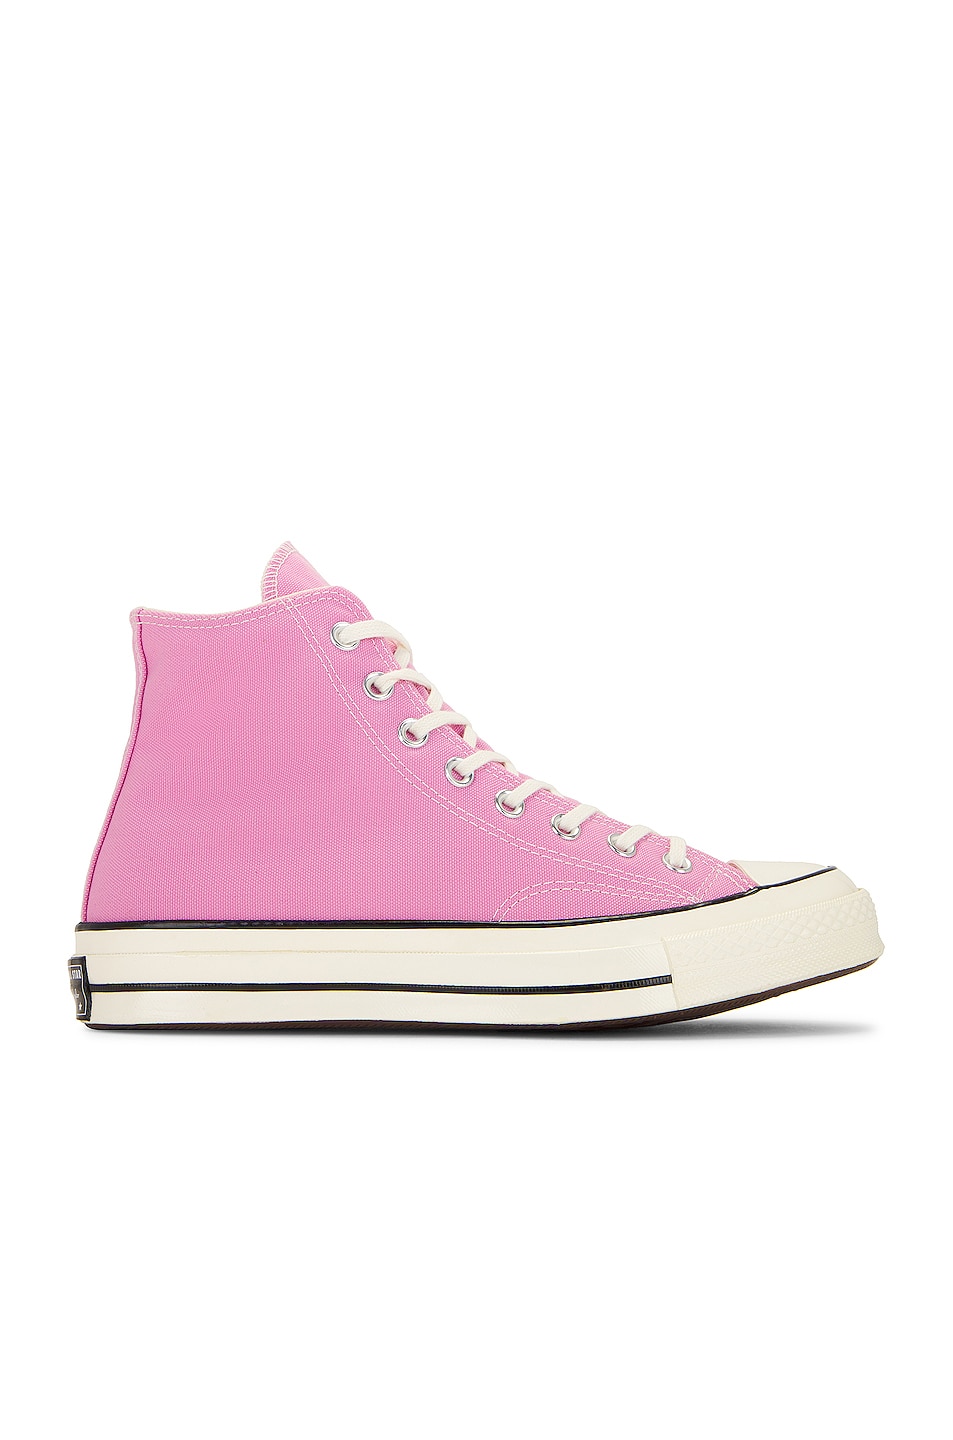 Image 1 of Converse Chuck 70 Spring Color Shoe in Amber Pink, Egret, & Black